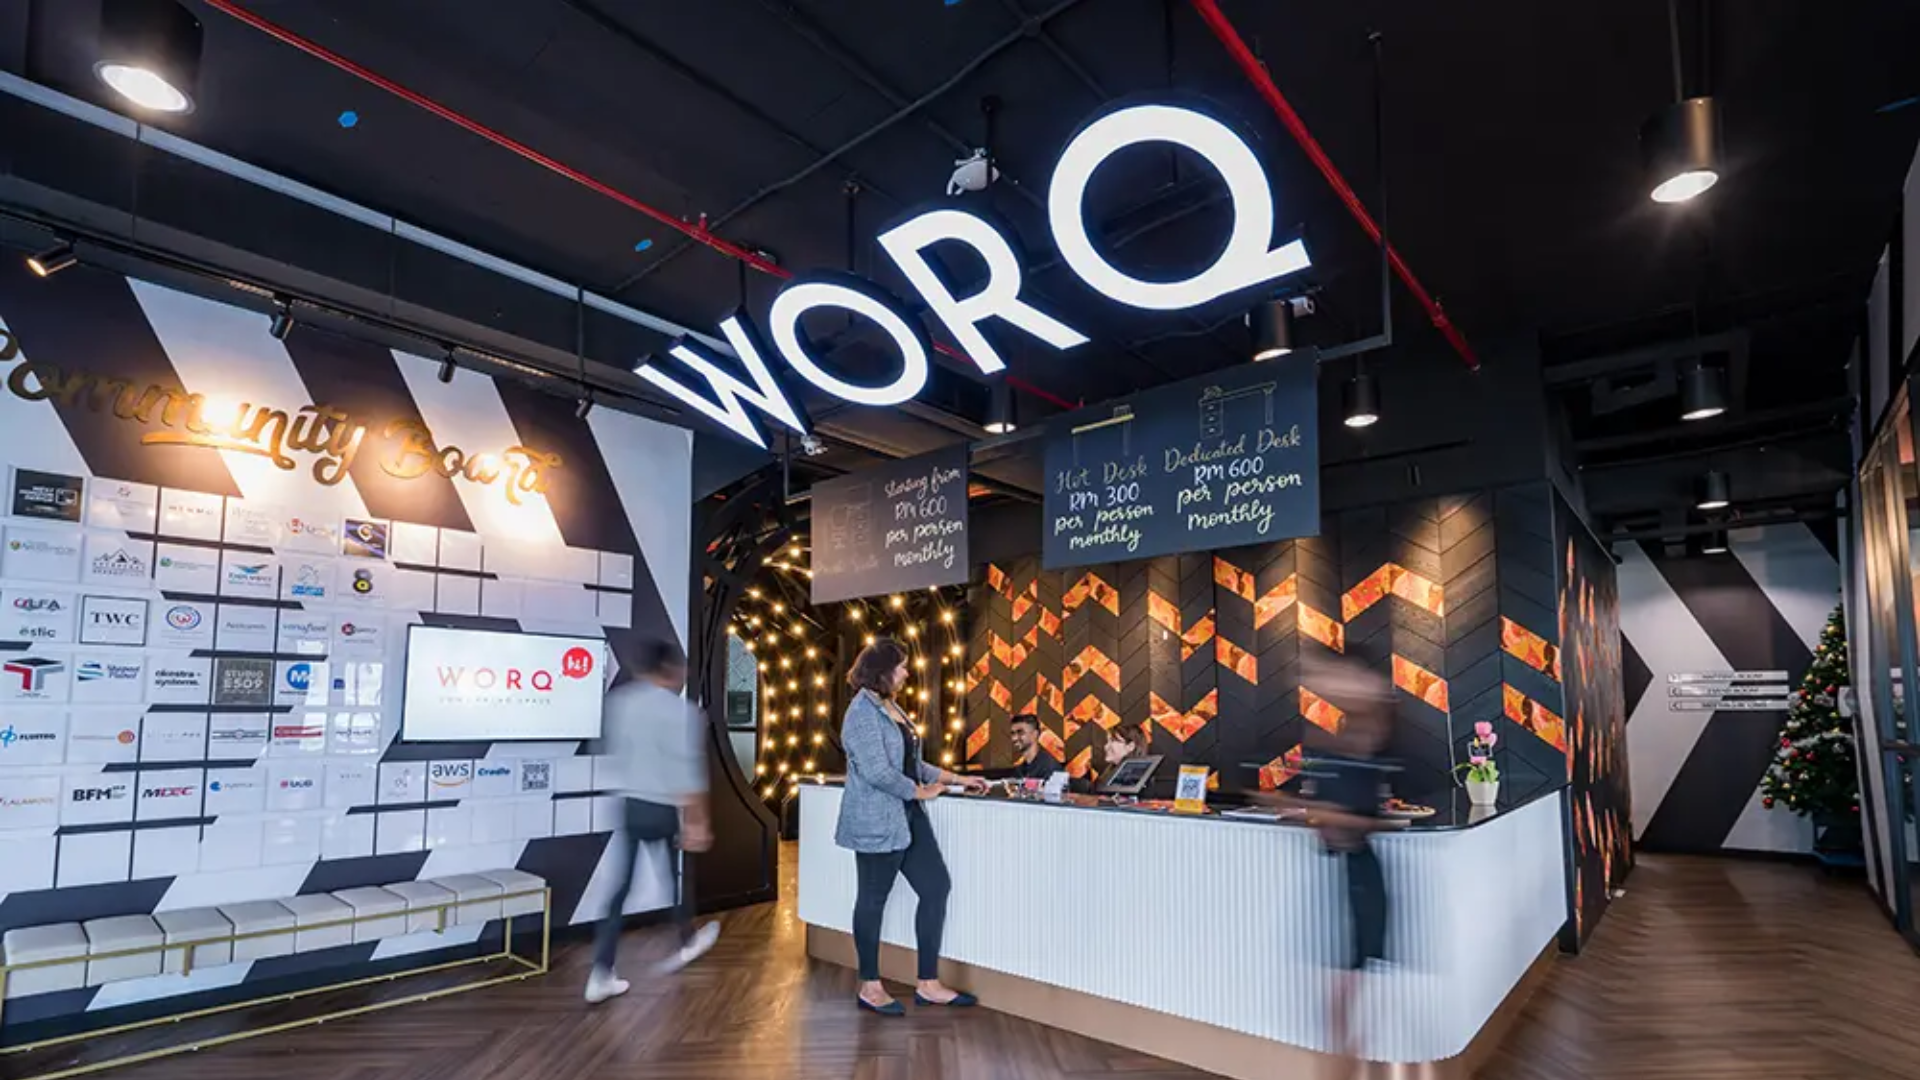 WORQ accelerates the startup ecosystem, Malaysia’s digital economy